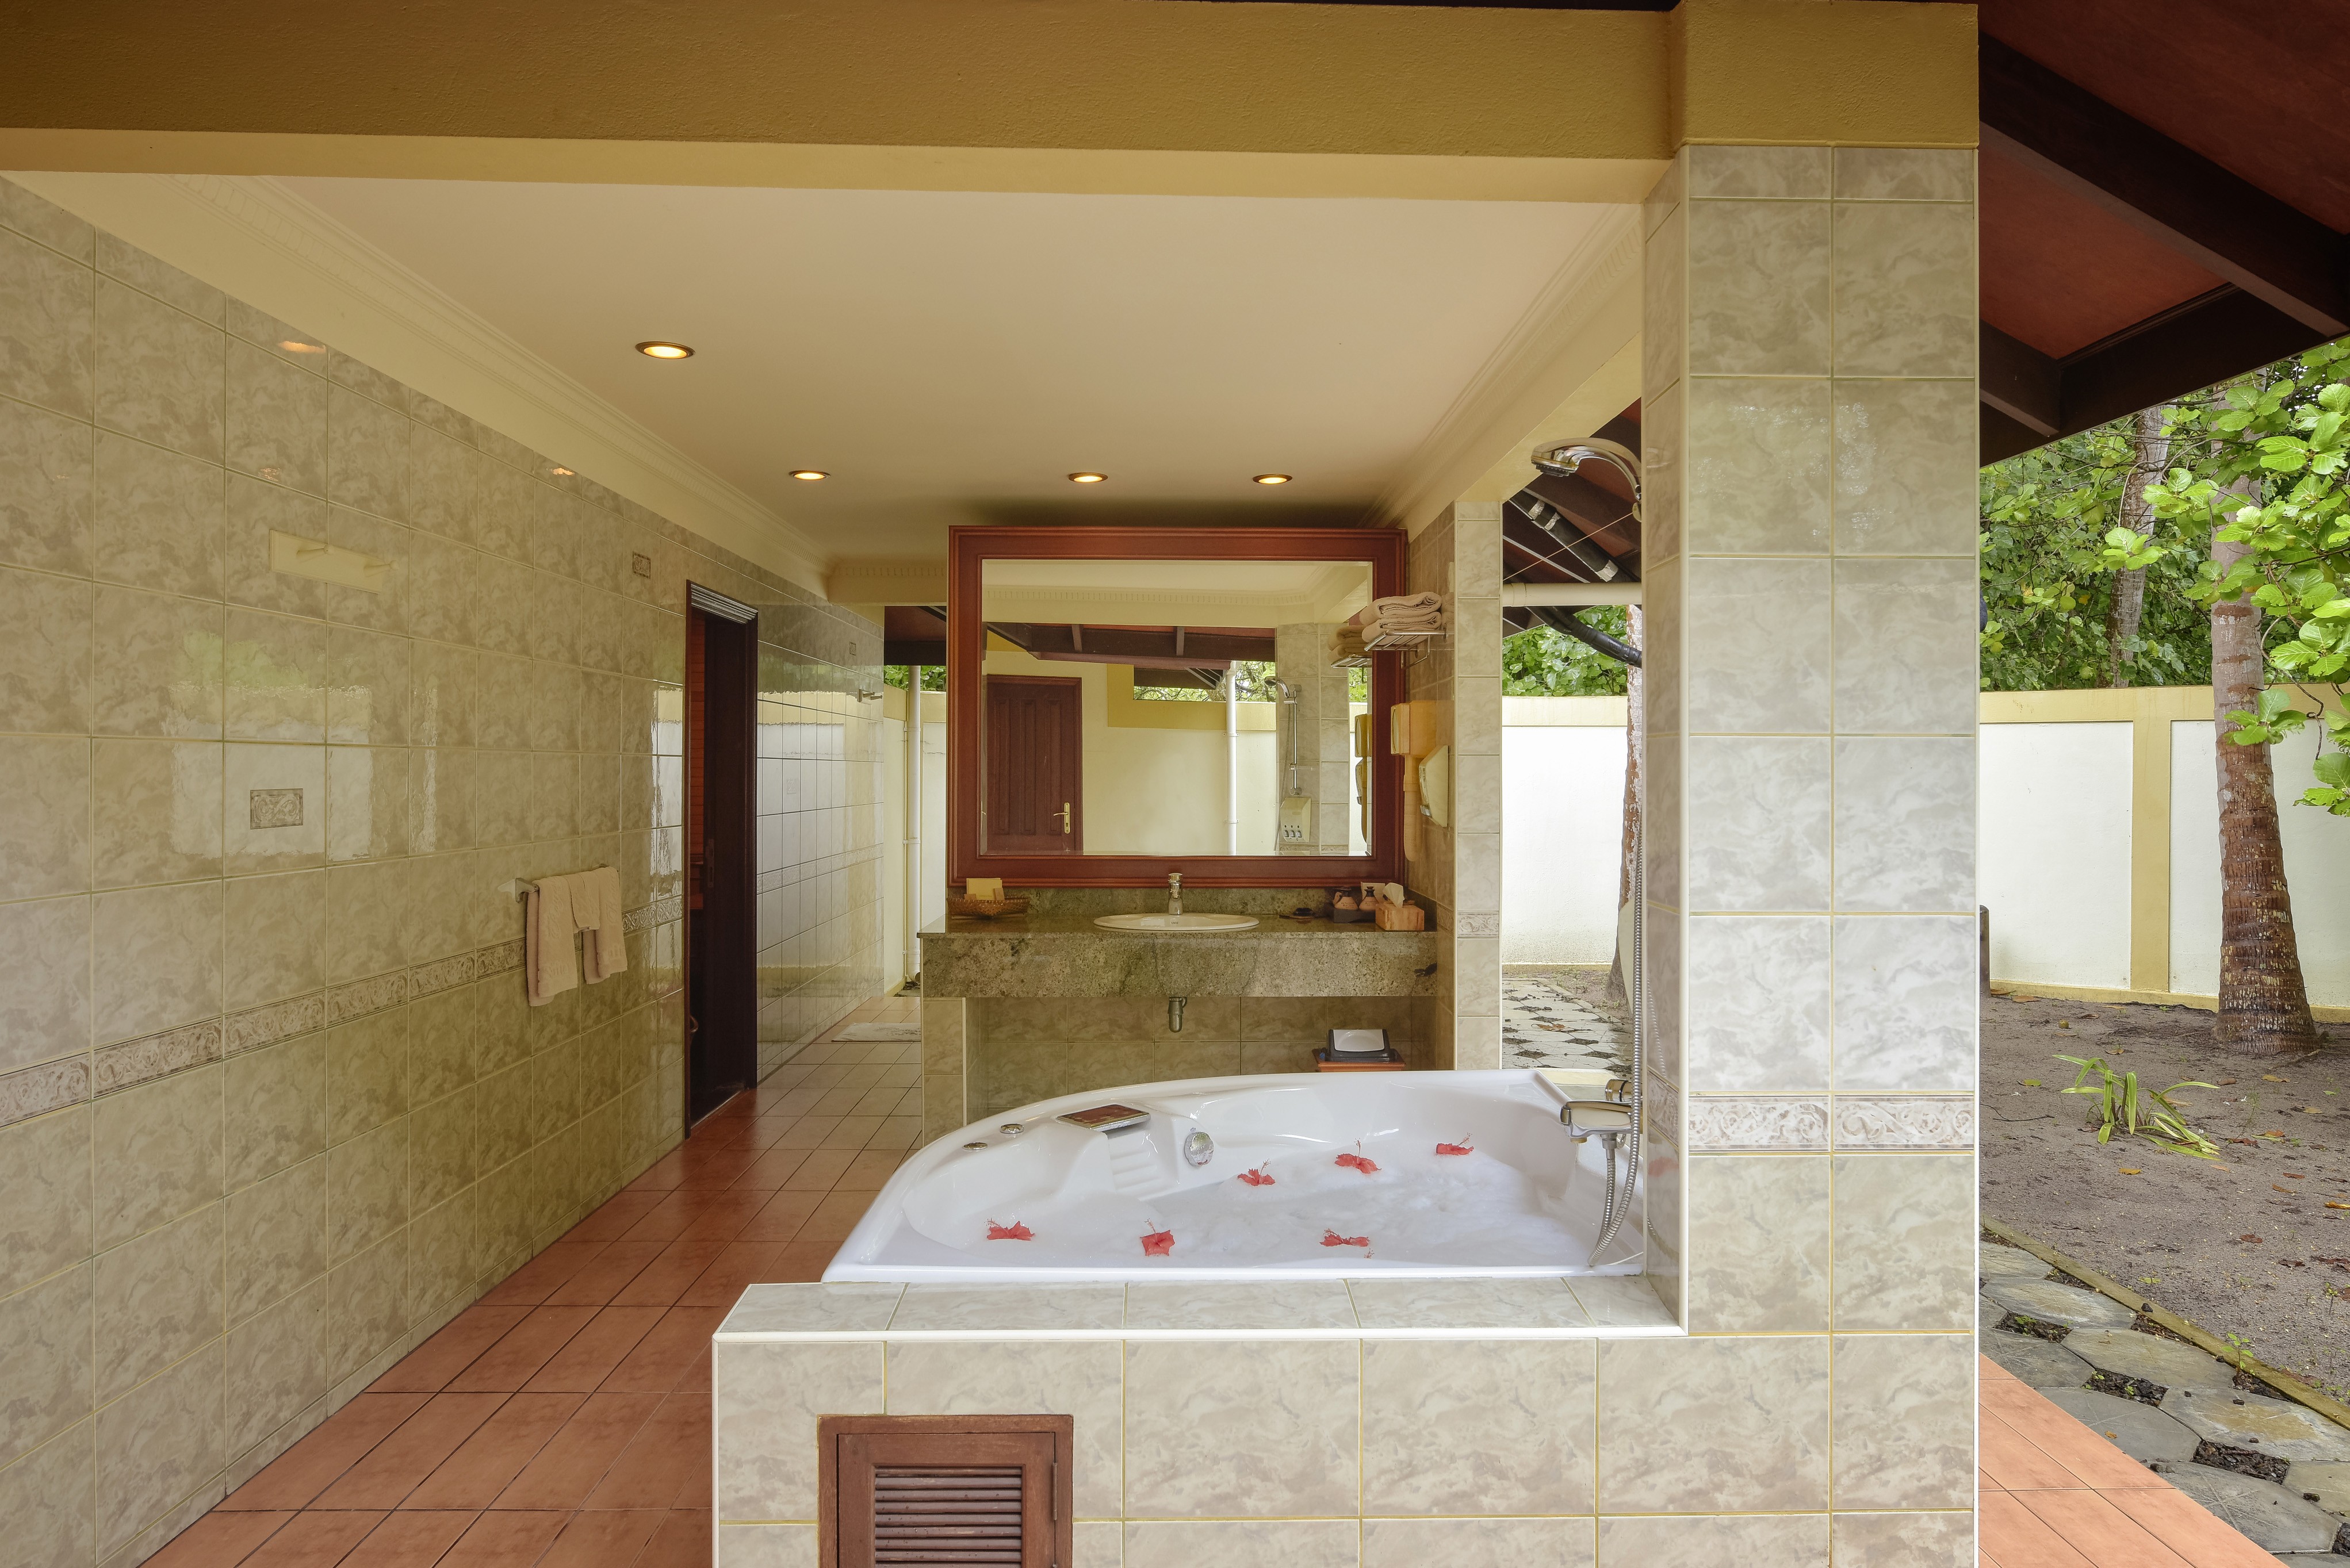 2 Bedroom Beach Pool Residence, Royal Island Resort Maldives 5*